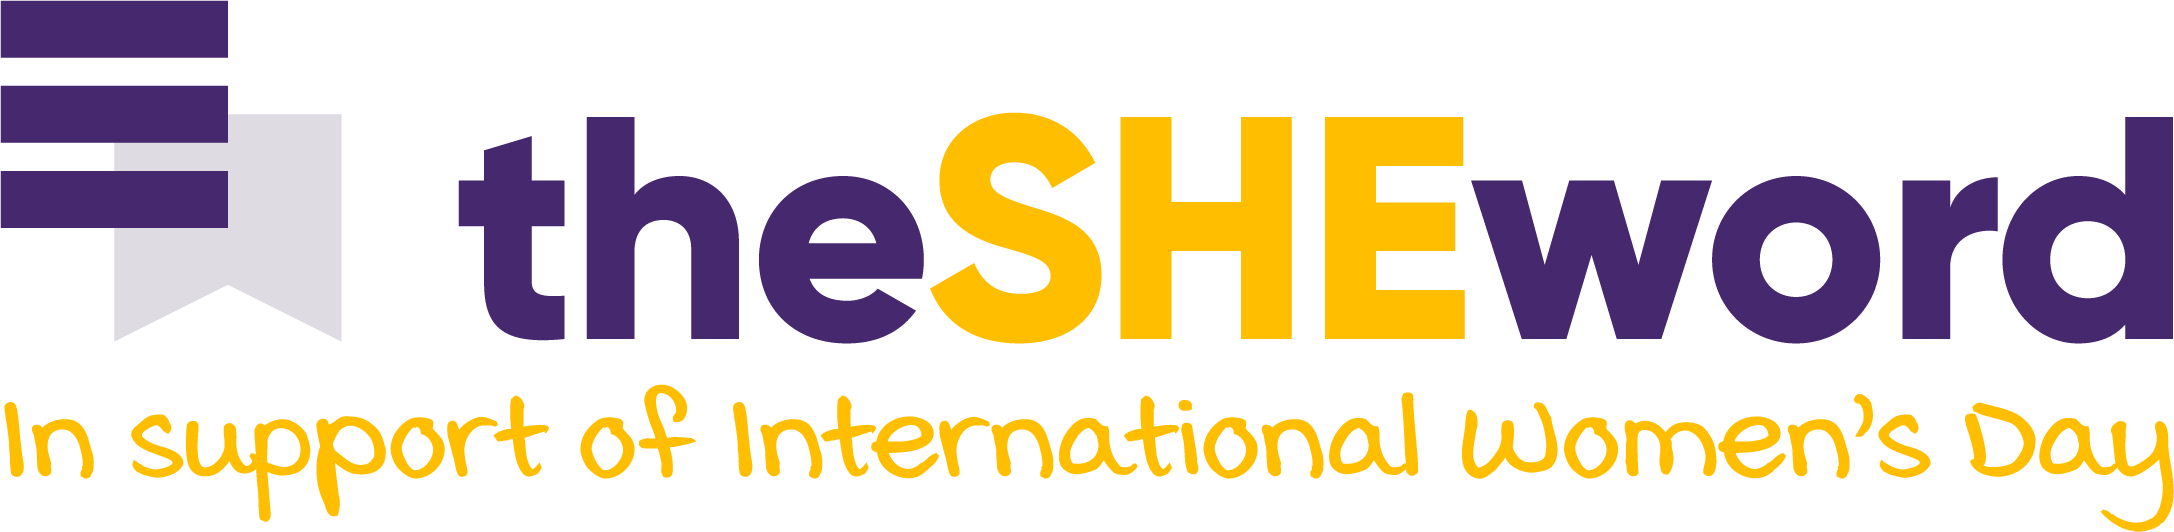 thesheword-logo-iwd